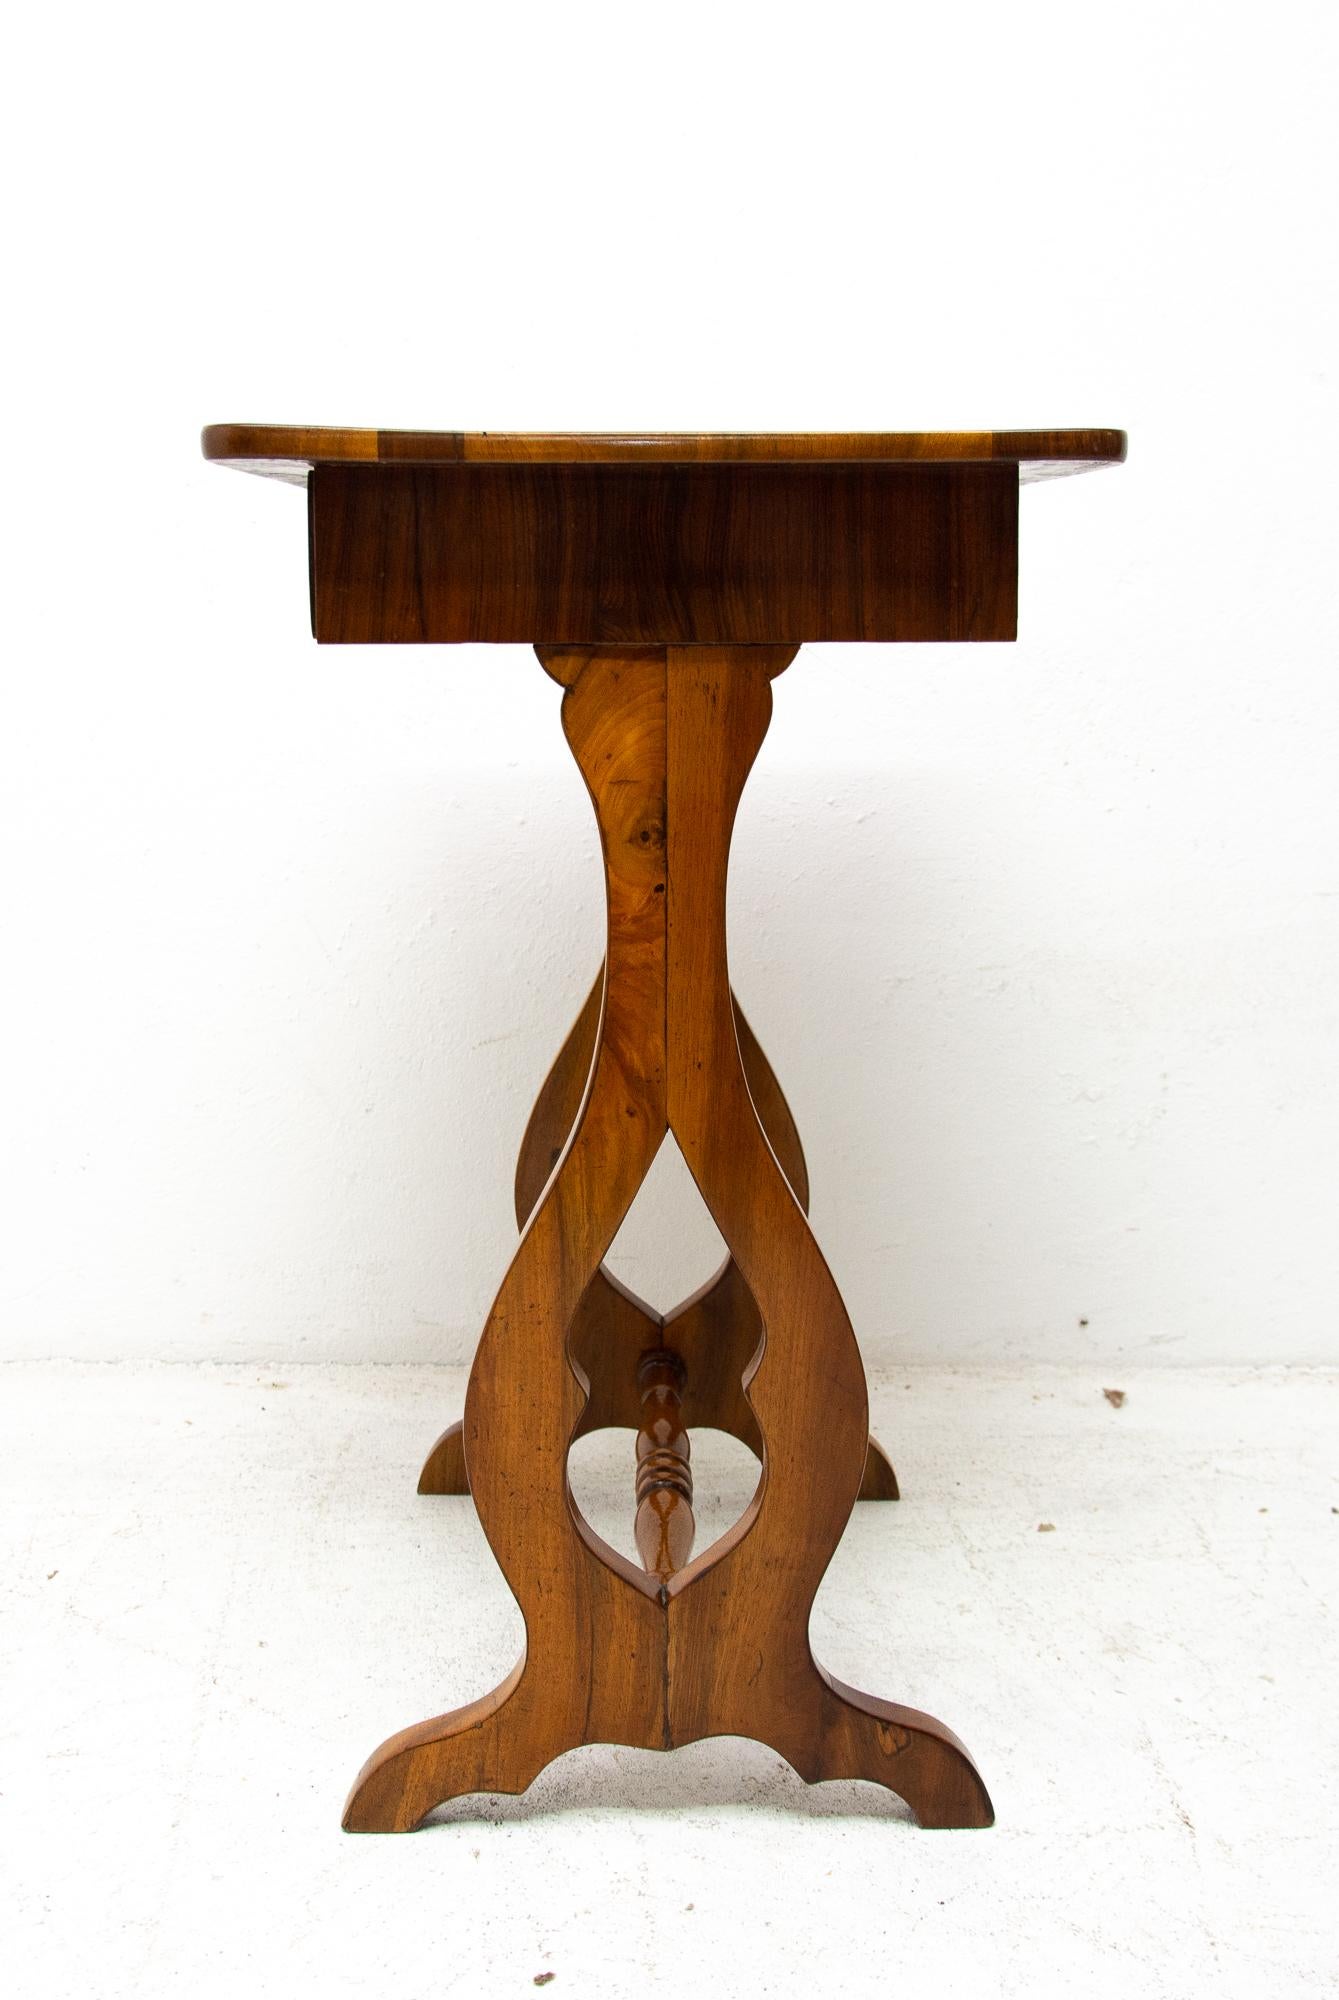 Wood Original Early 19th Century Biedermeier Sewing Table, Austria-Hungary, 1830